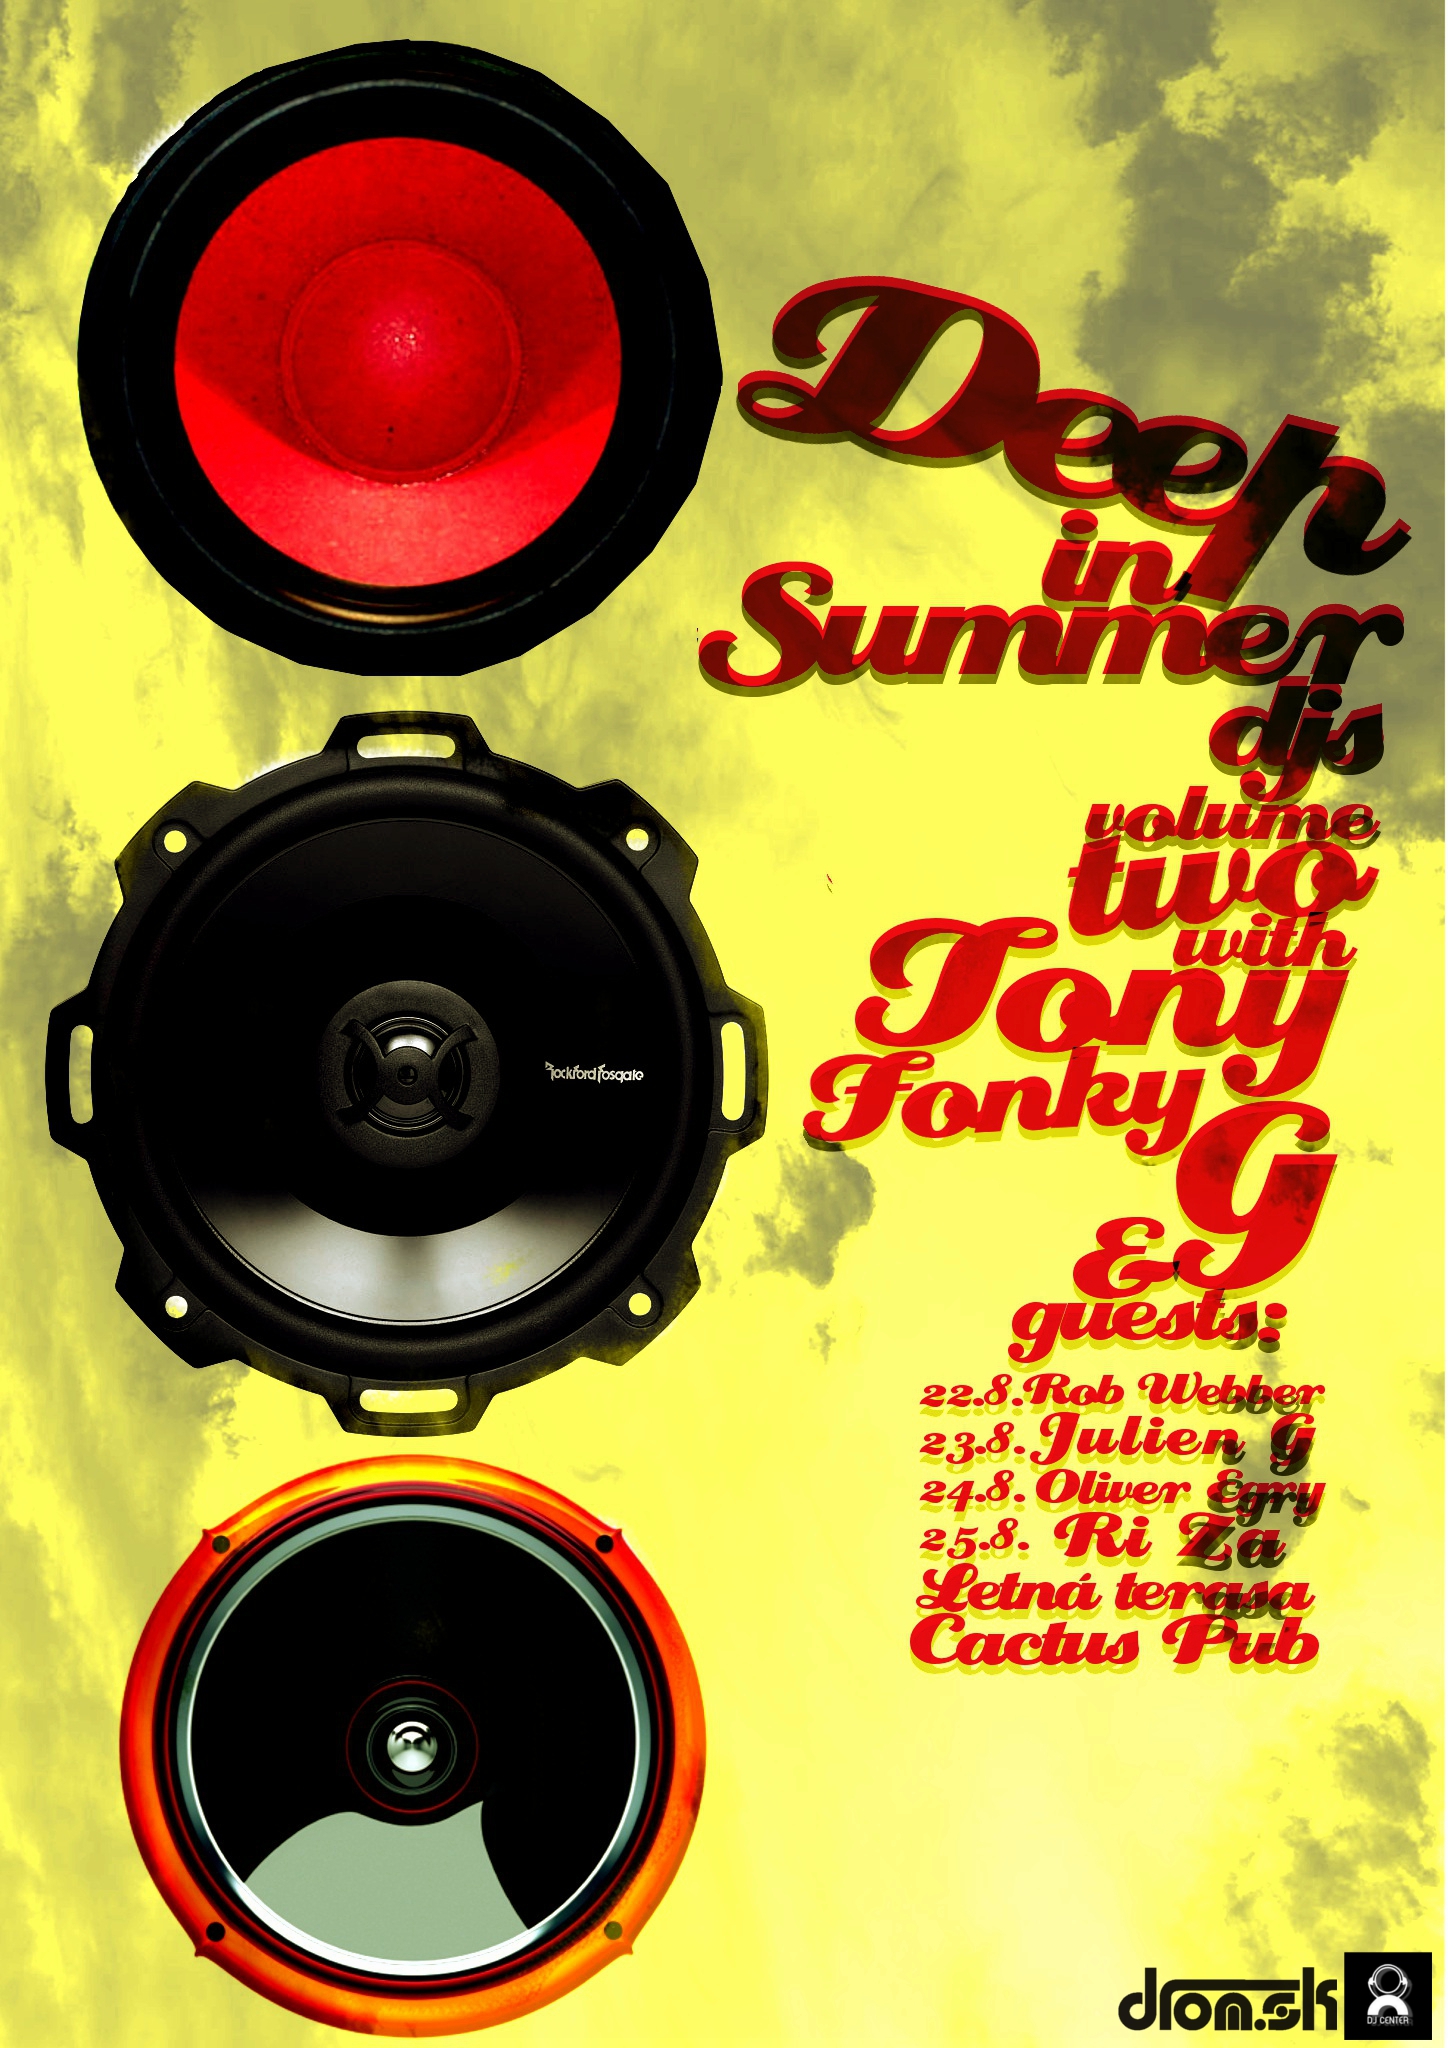 Deep in summer djs vol.2 poster